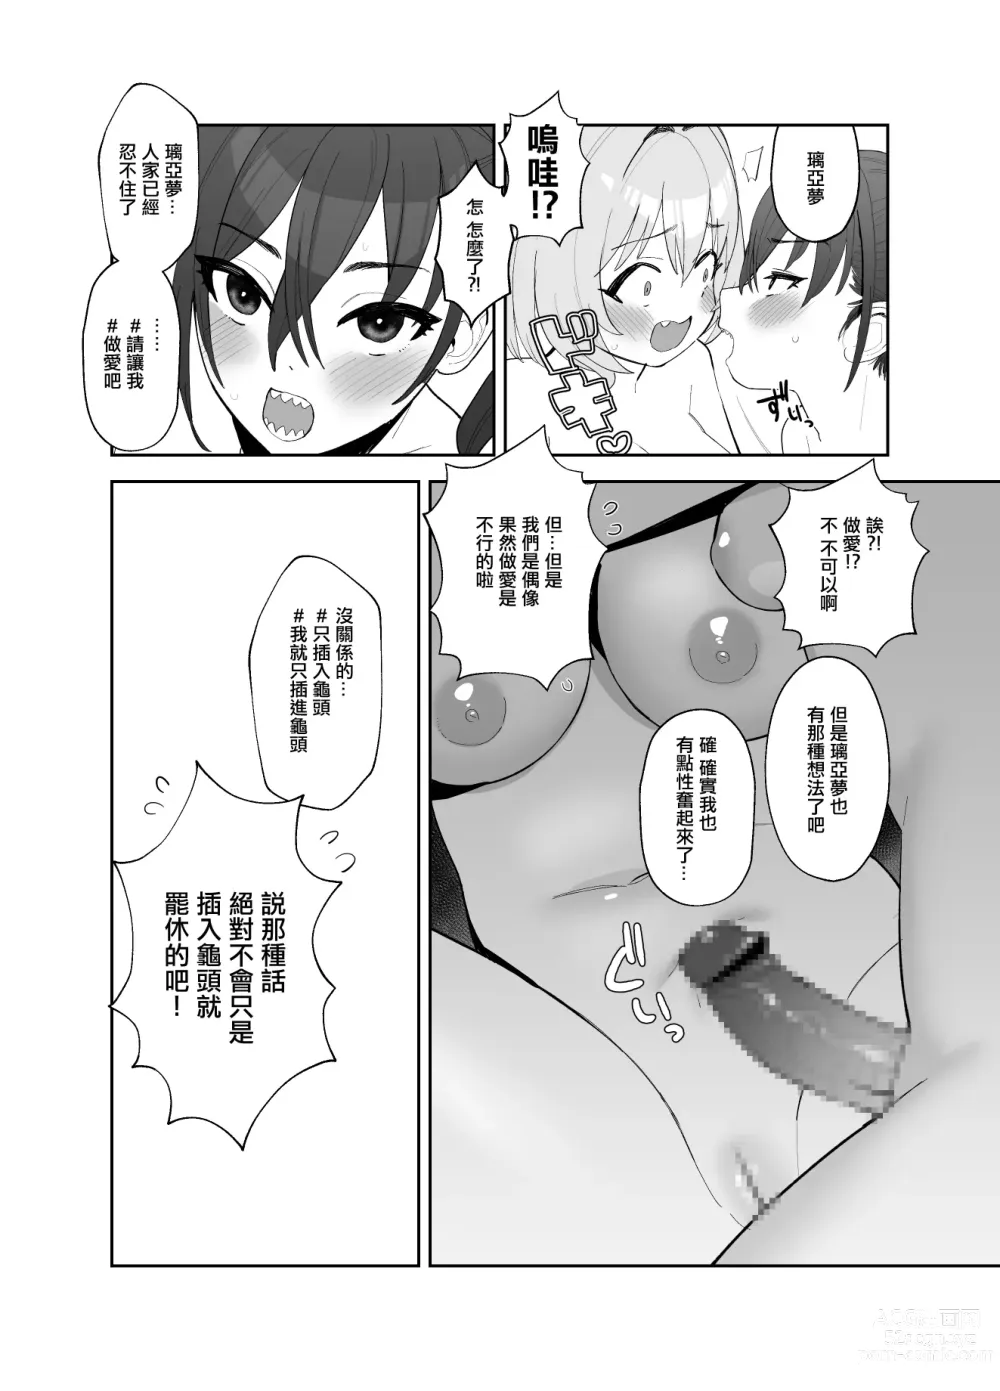 Page 9 of doujinshi 明長出了肉棒與璃亞夢做愛的漫畫